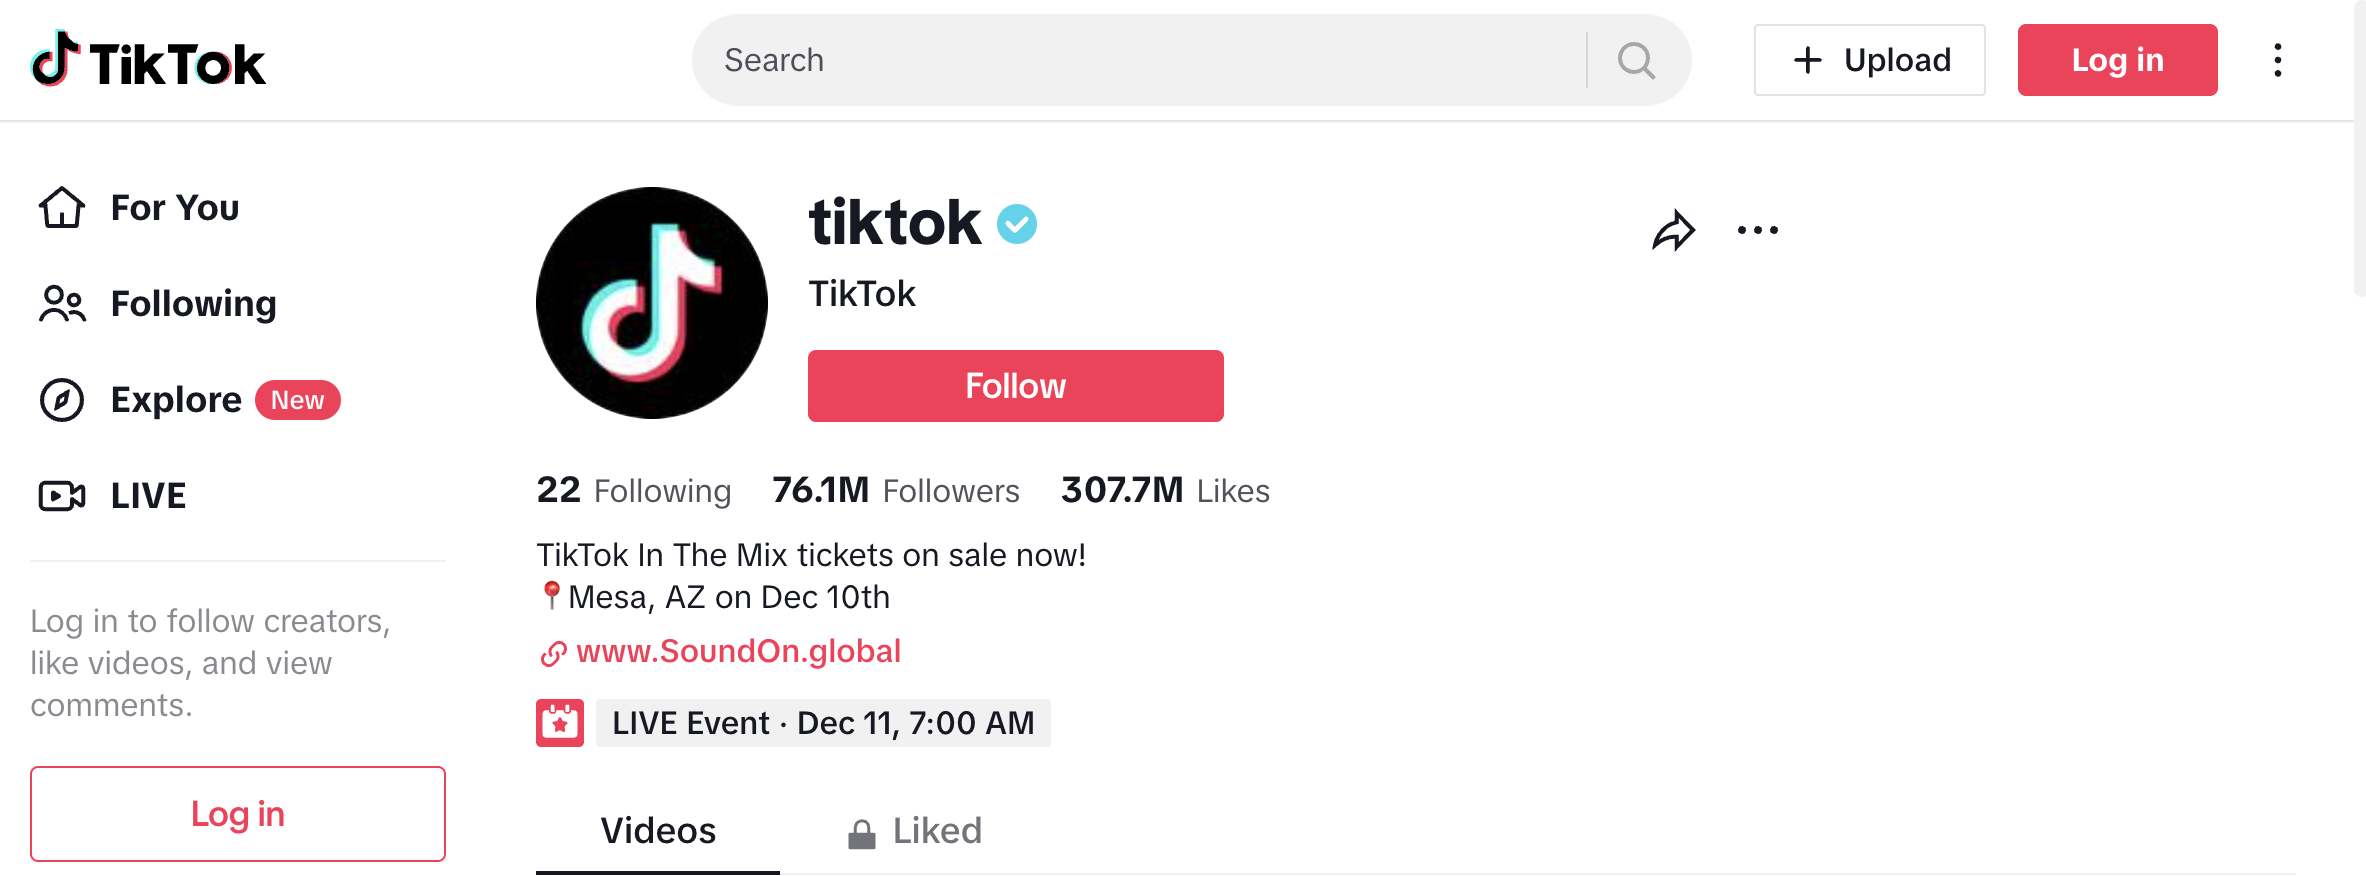 TikTok official account on TikTok